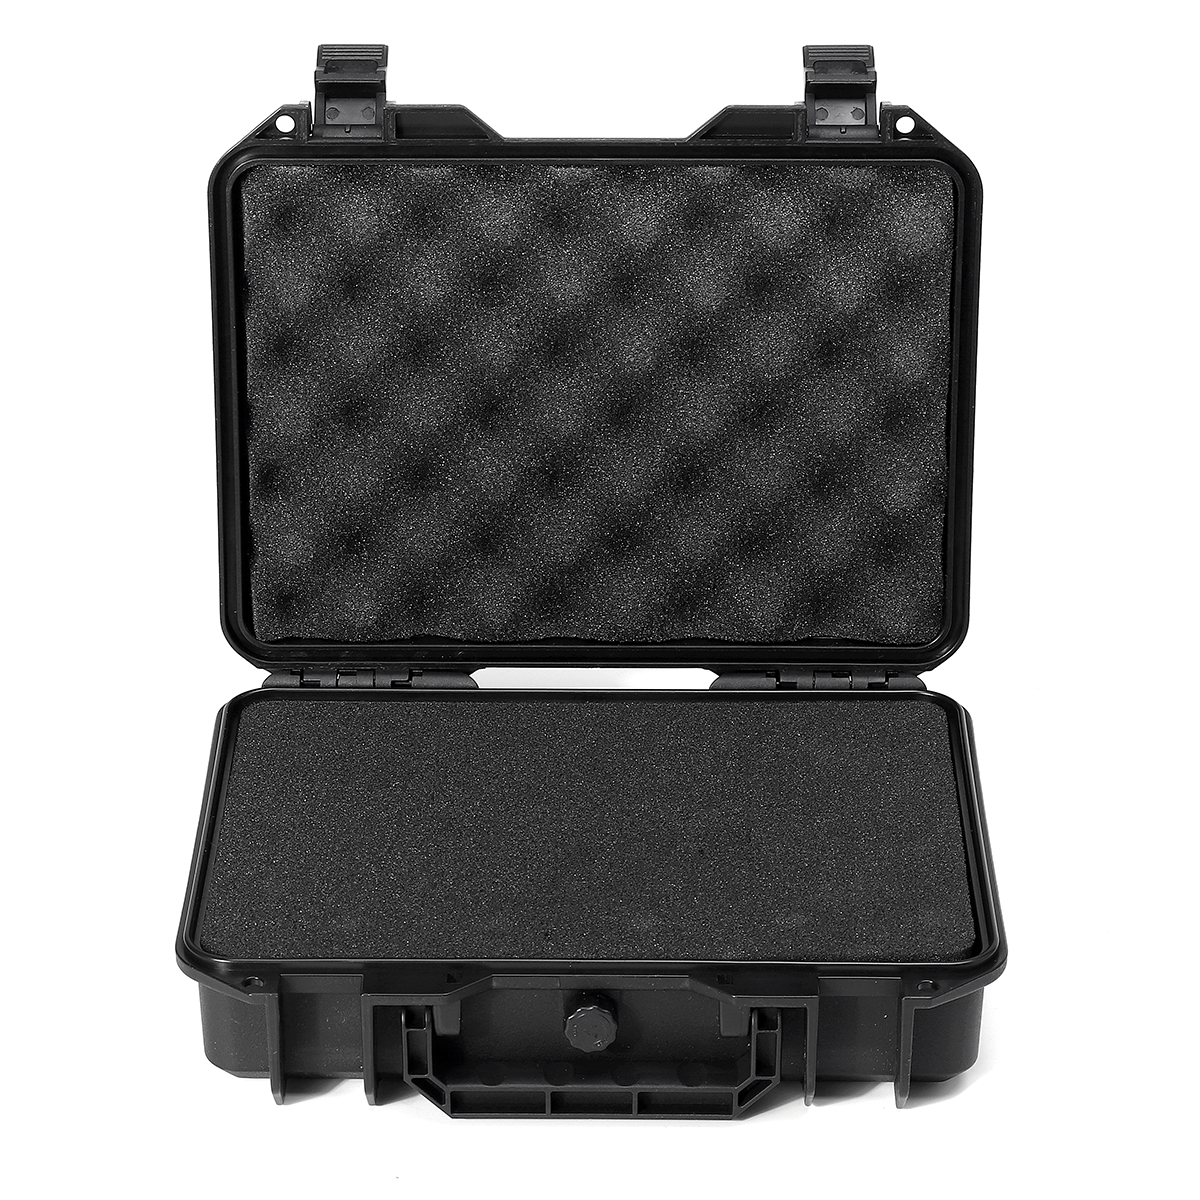 25020074mm-Waterproof-Hand-Carry-Tool-Case-Bag-Storage-Box-Camera-Photography-w-Sponge-1648371-6